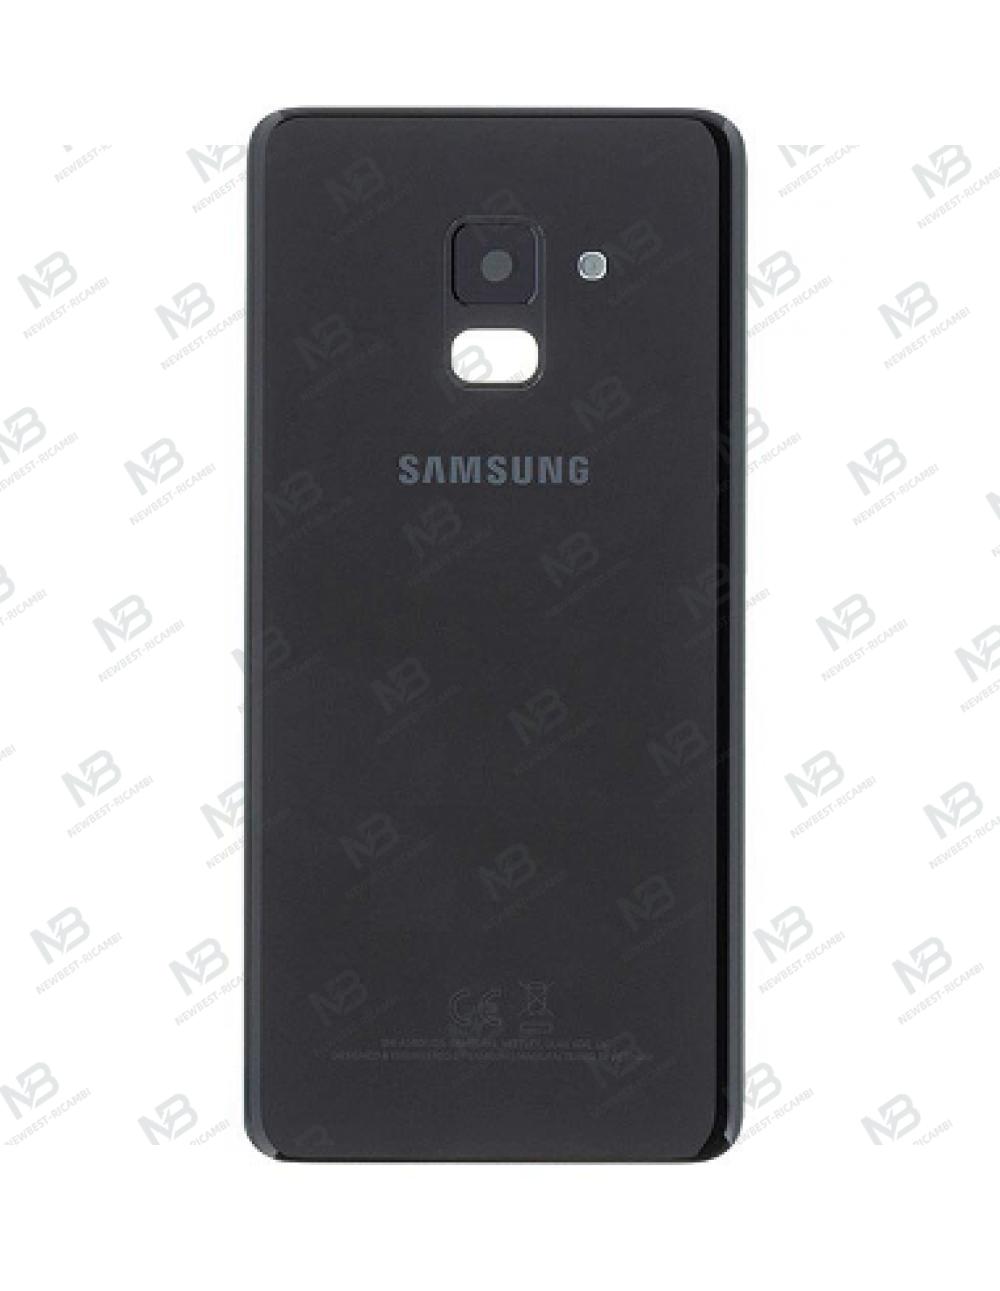 samsung galaxy A8 plus 2018 A730F back cover black